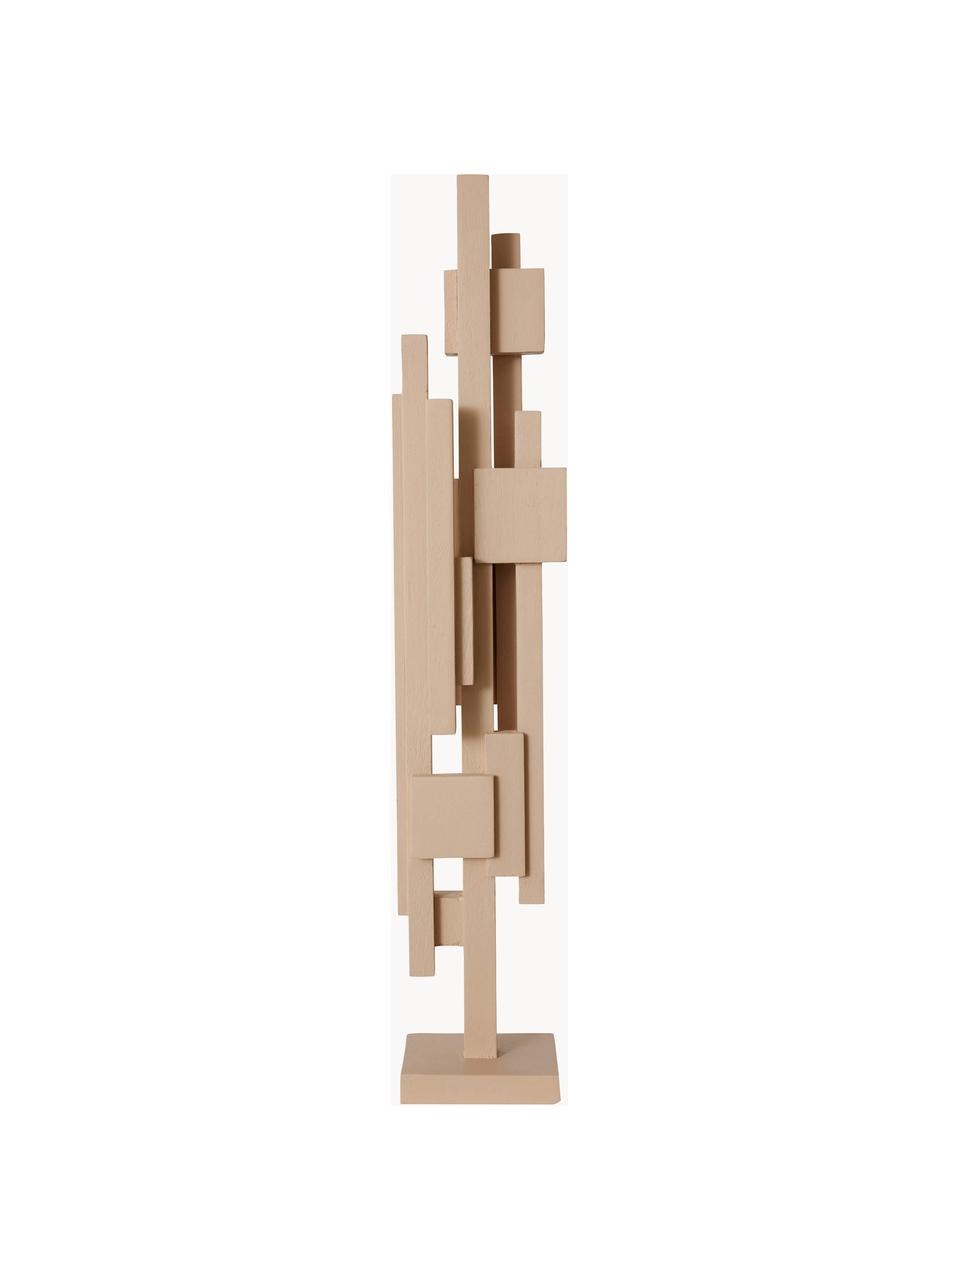 Objet décoratif artisanal en bois de teck Skyline, Bois de teck, Bois de teck, larg. 9 x prof. 42 cm